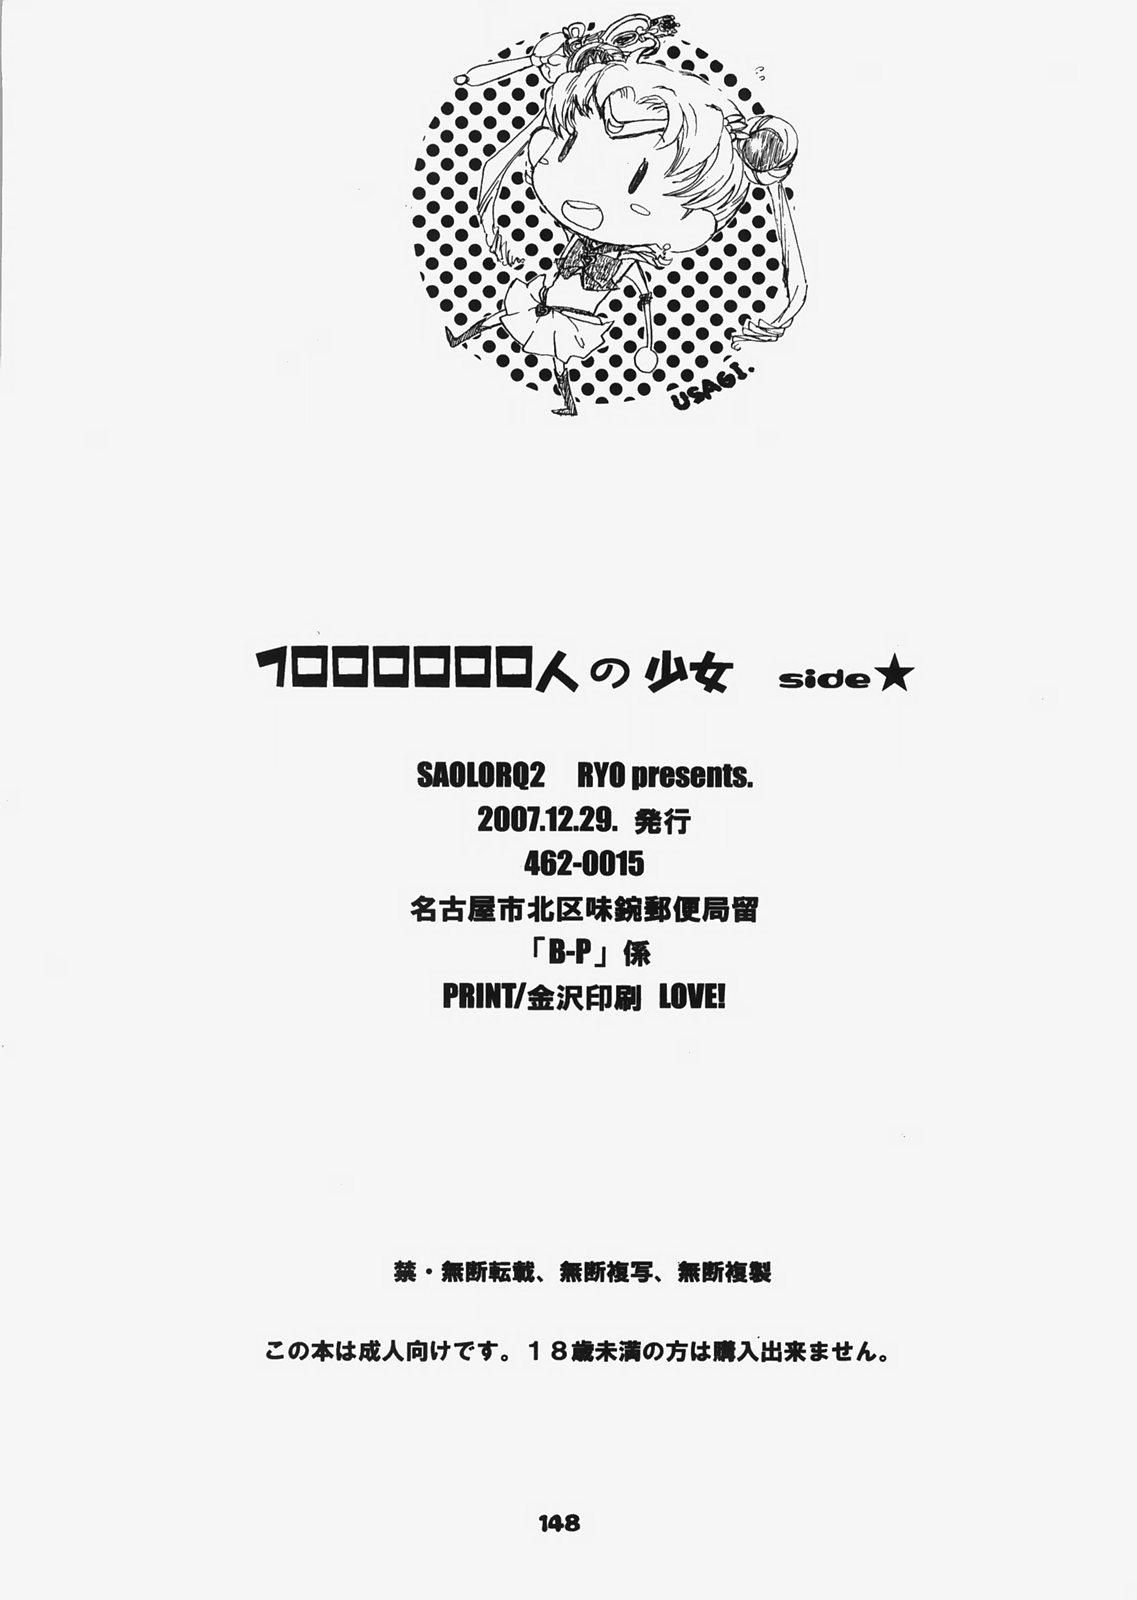 1000000-nin no Shoujo side heart 142